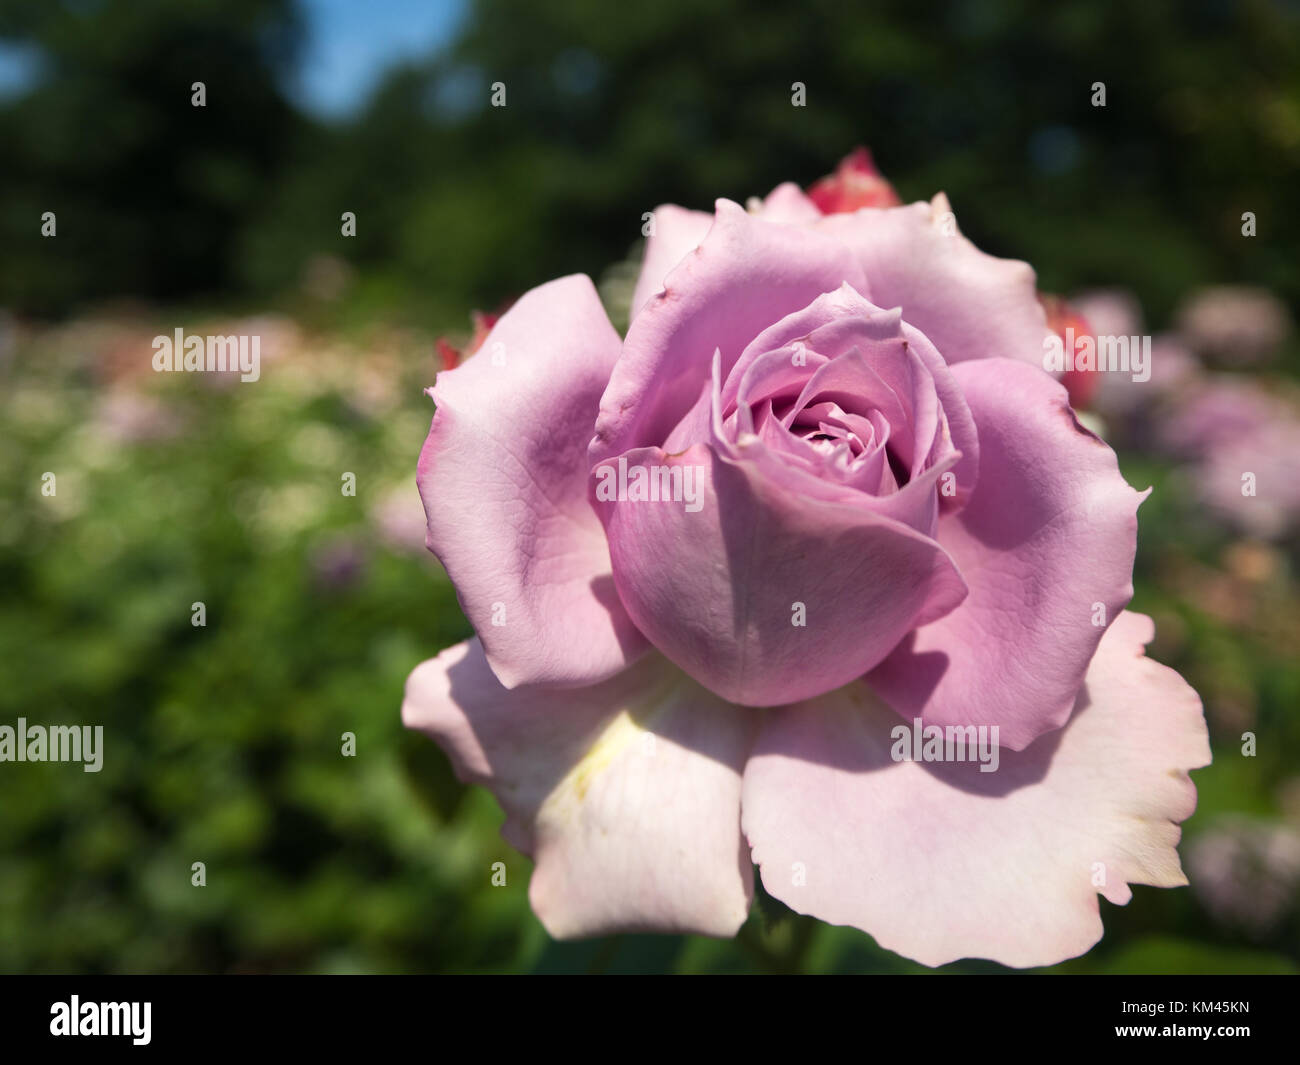 A lavender rose close-up Stock Photo